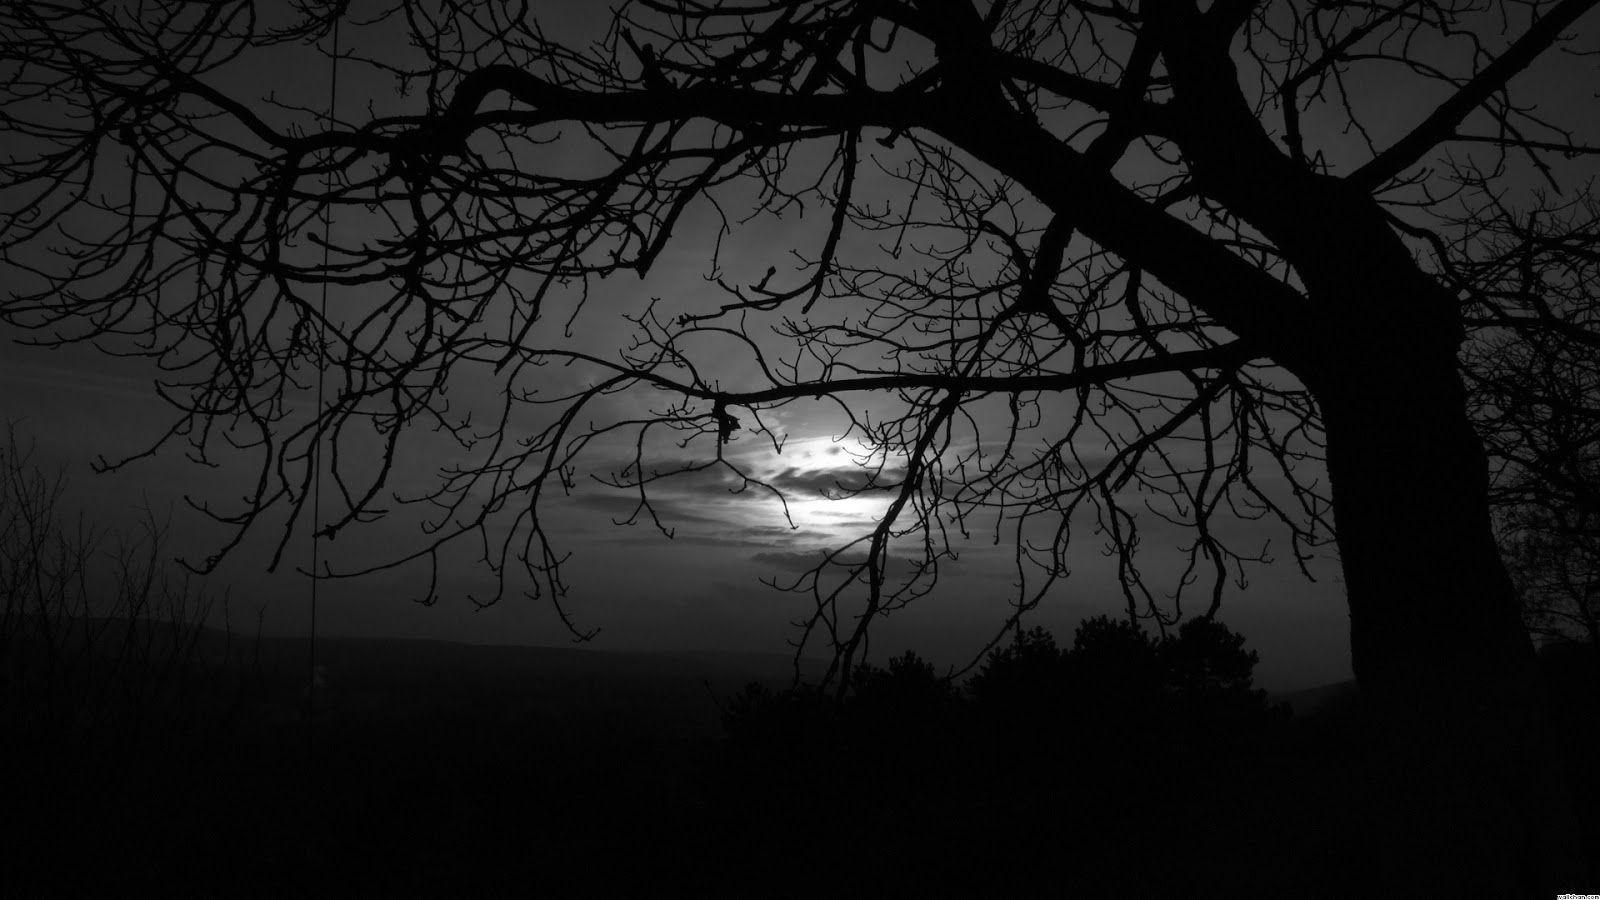 dark moonlight background